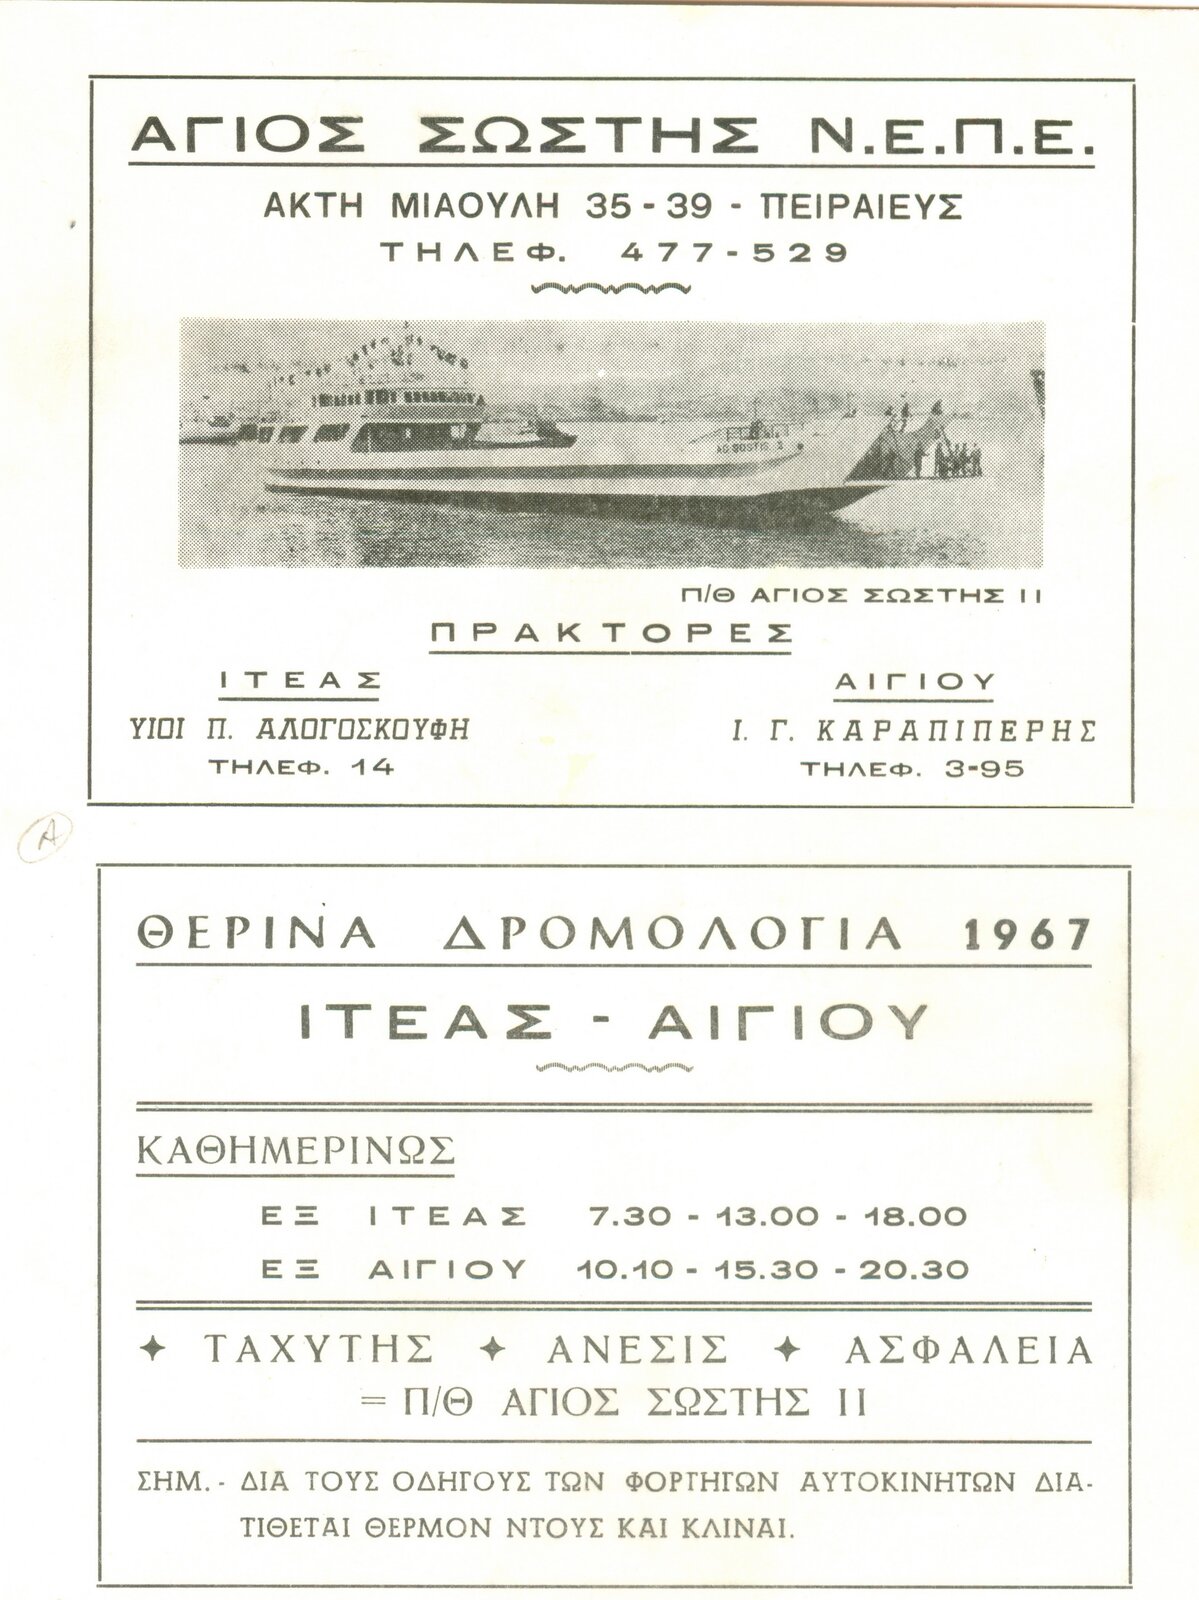 Agios Sostis II advertisment